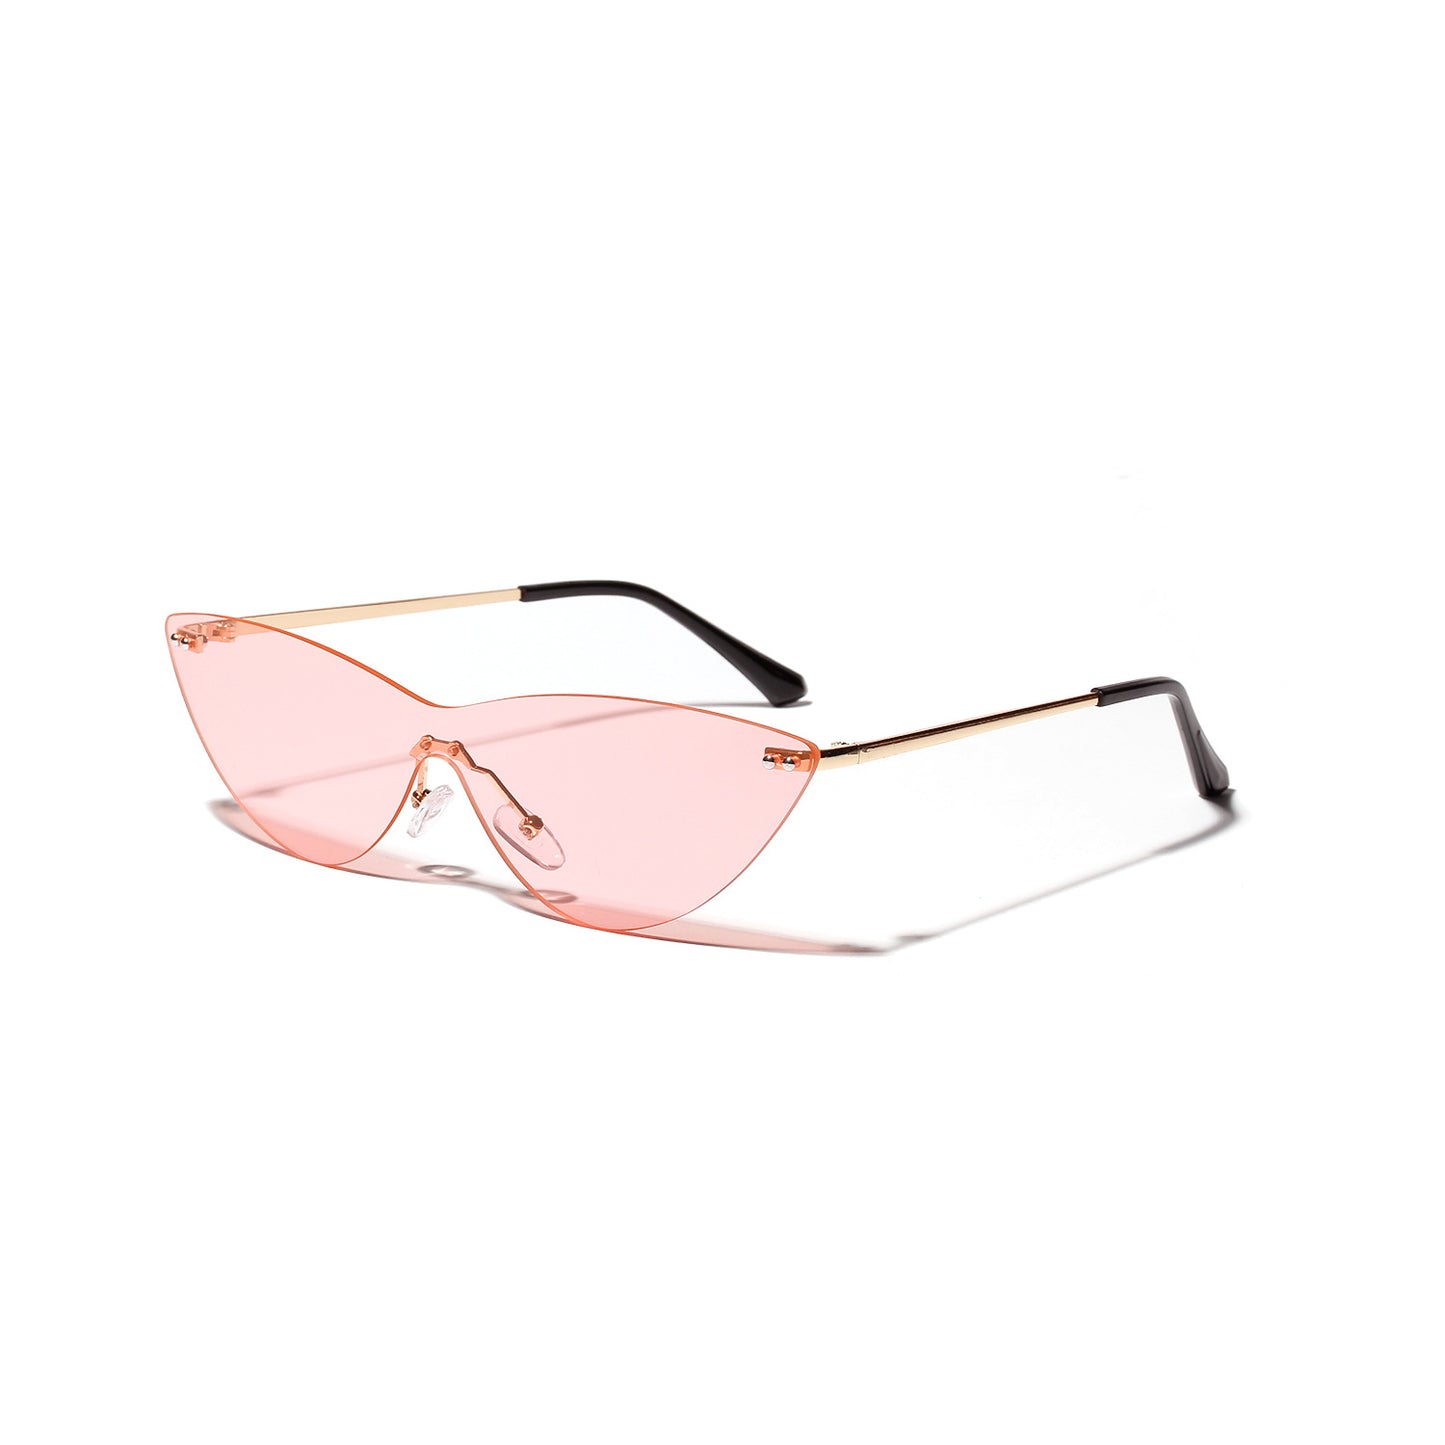 Vintage Metal Frame Sunglasses for Adults - UV400 Protection